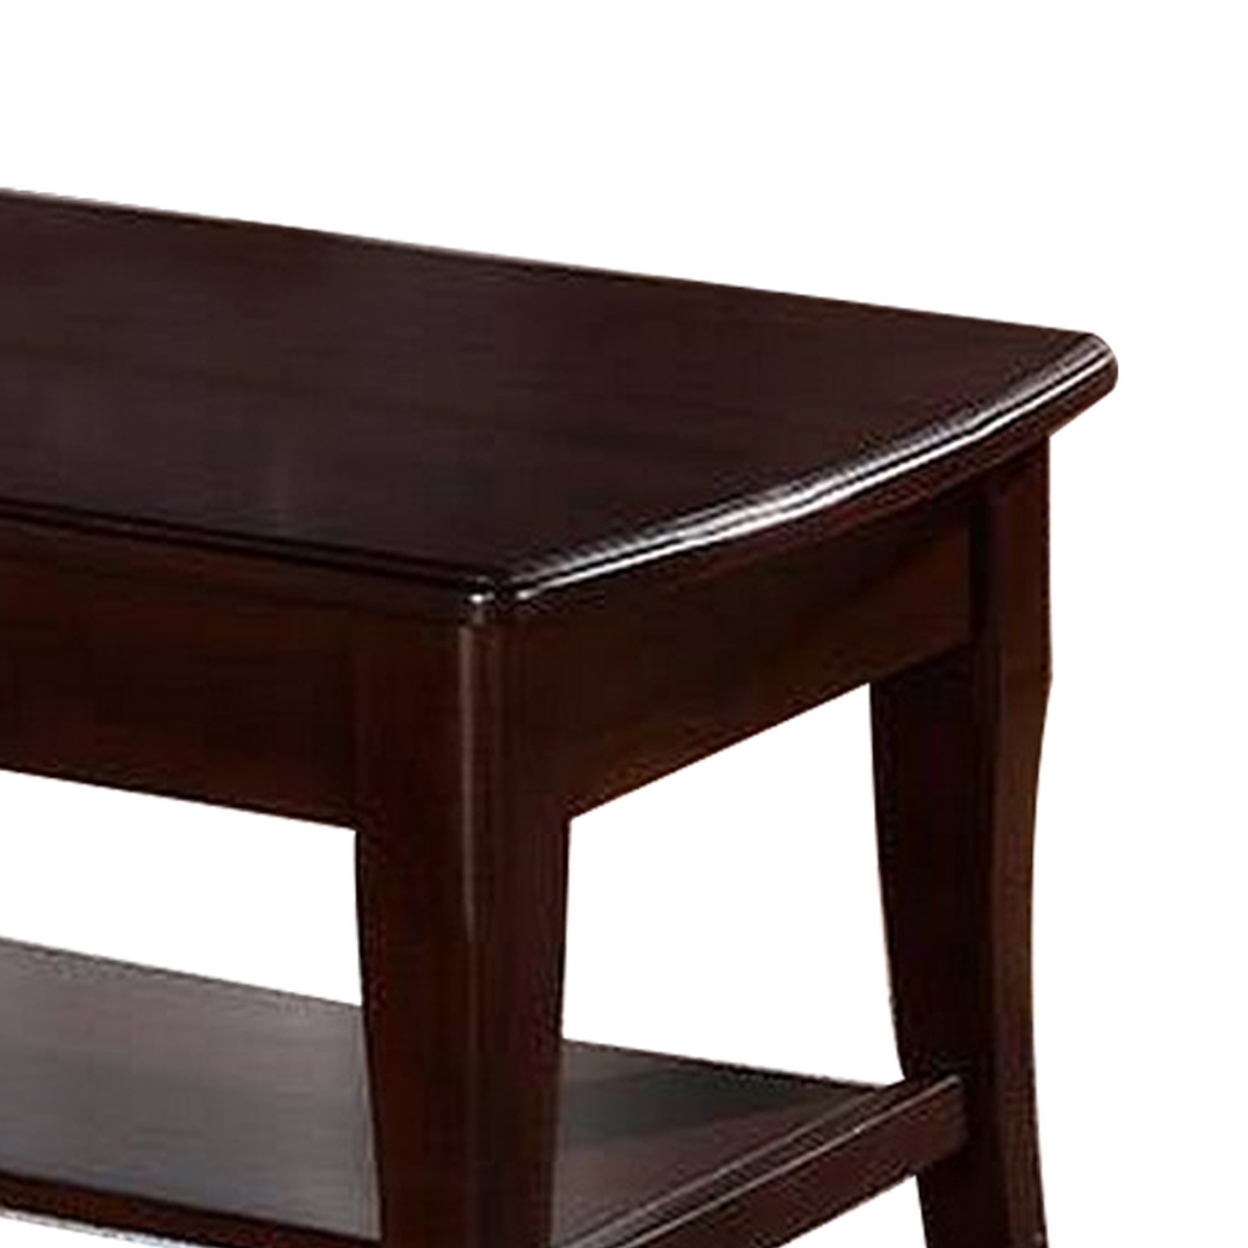 Jett 48 Inch Wood Coffee Table With 1 Drawer, Bottom Shelf, Cherry Brown